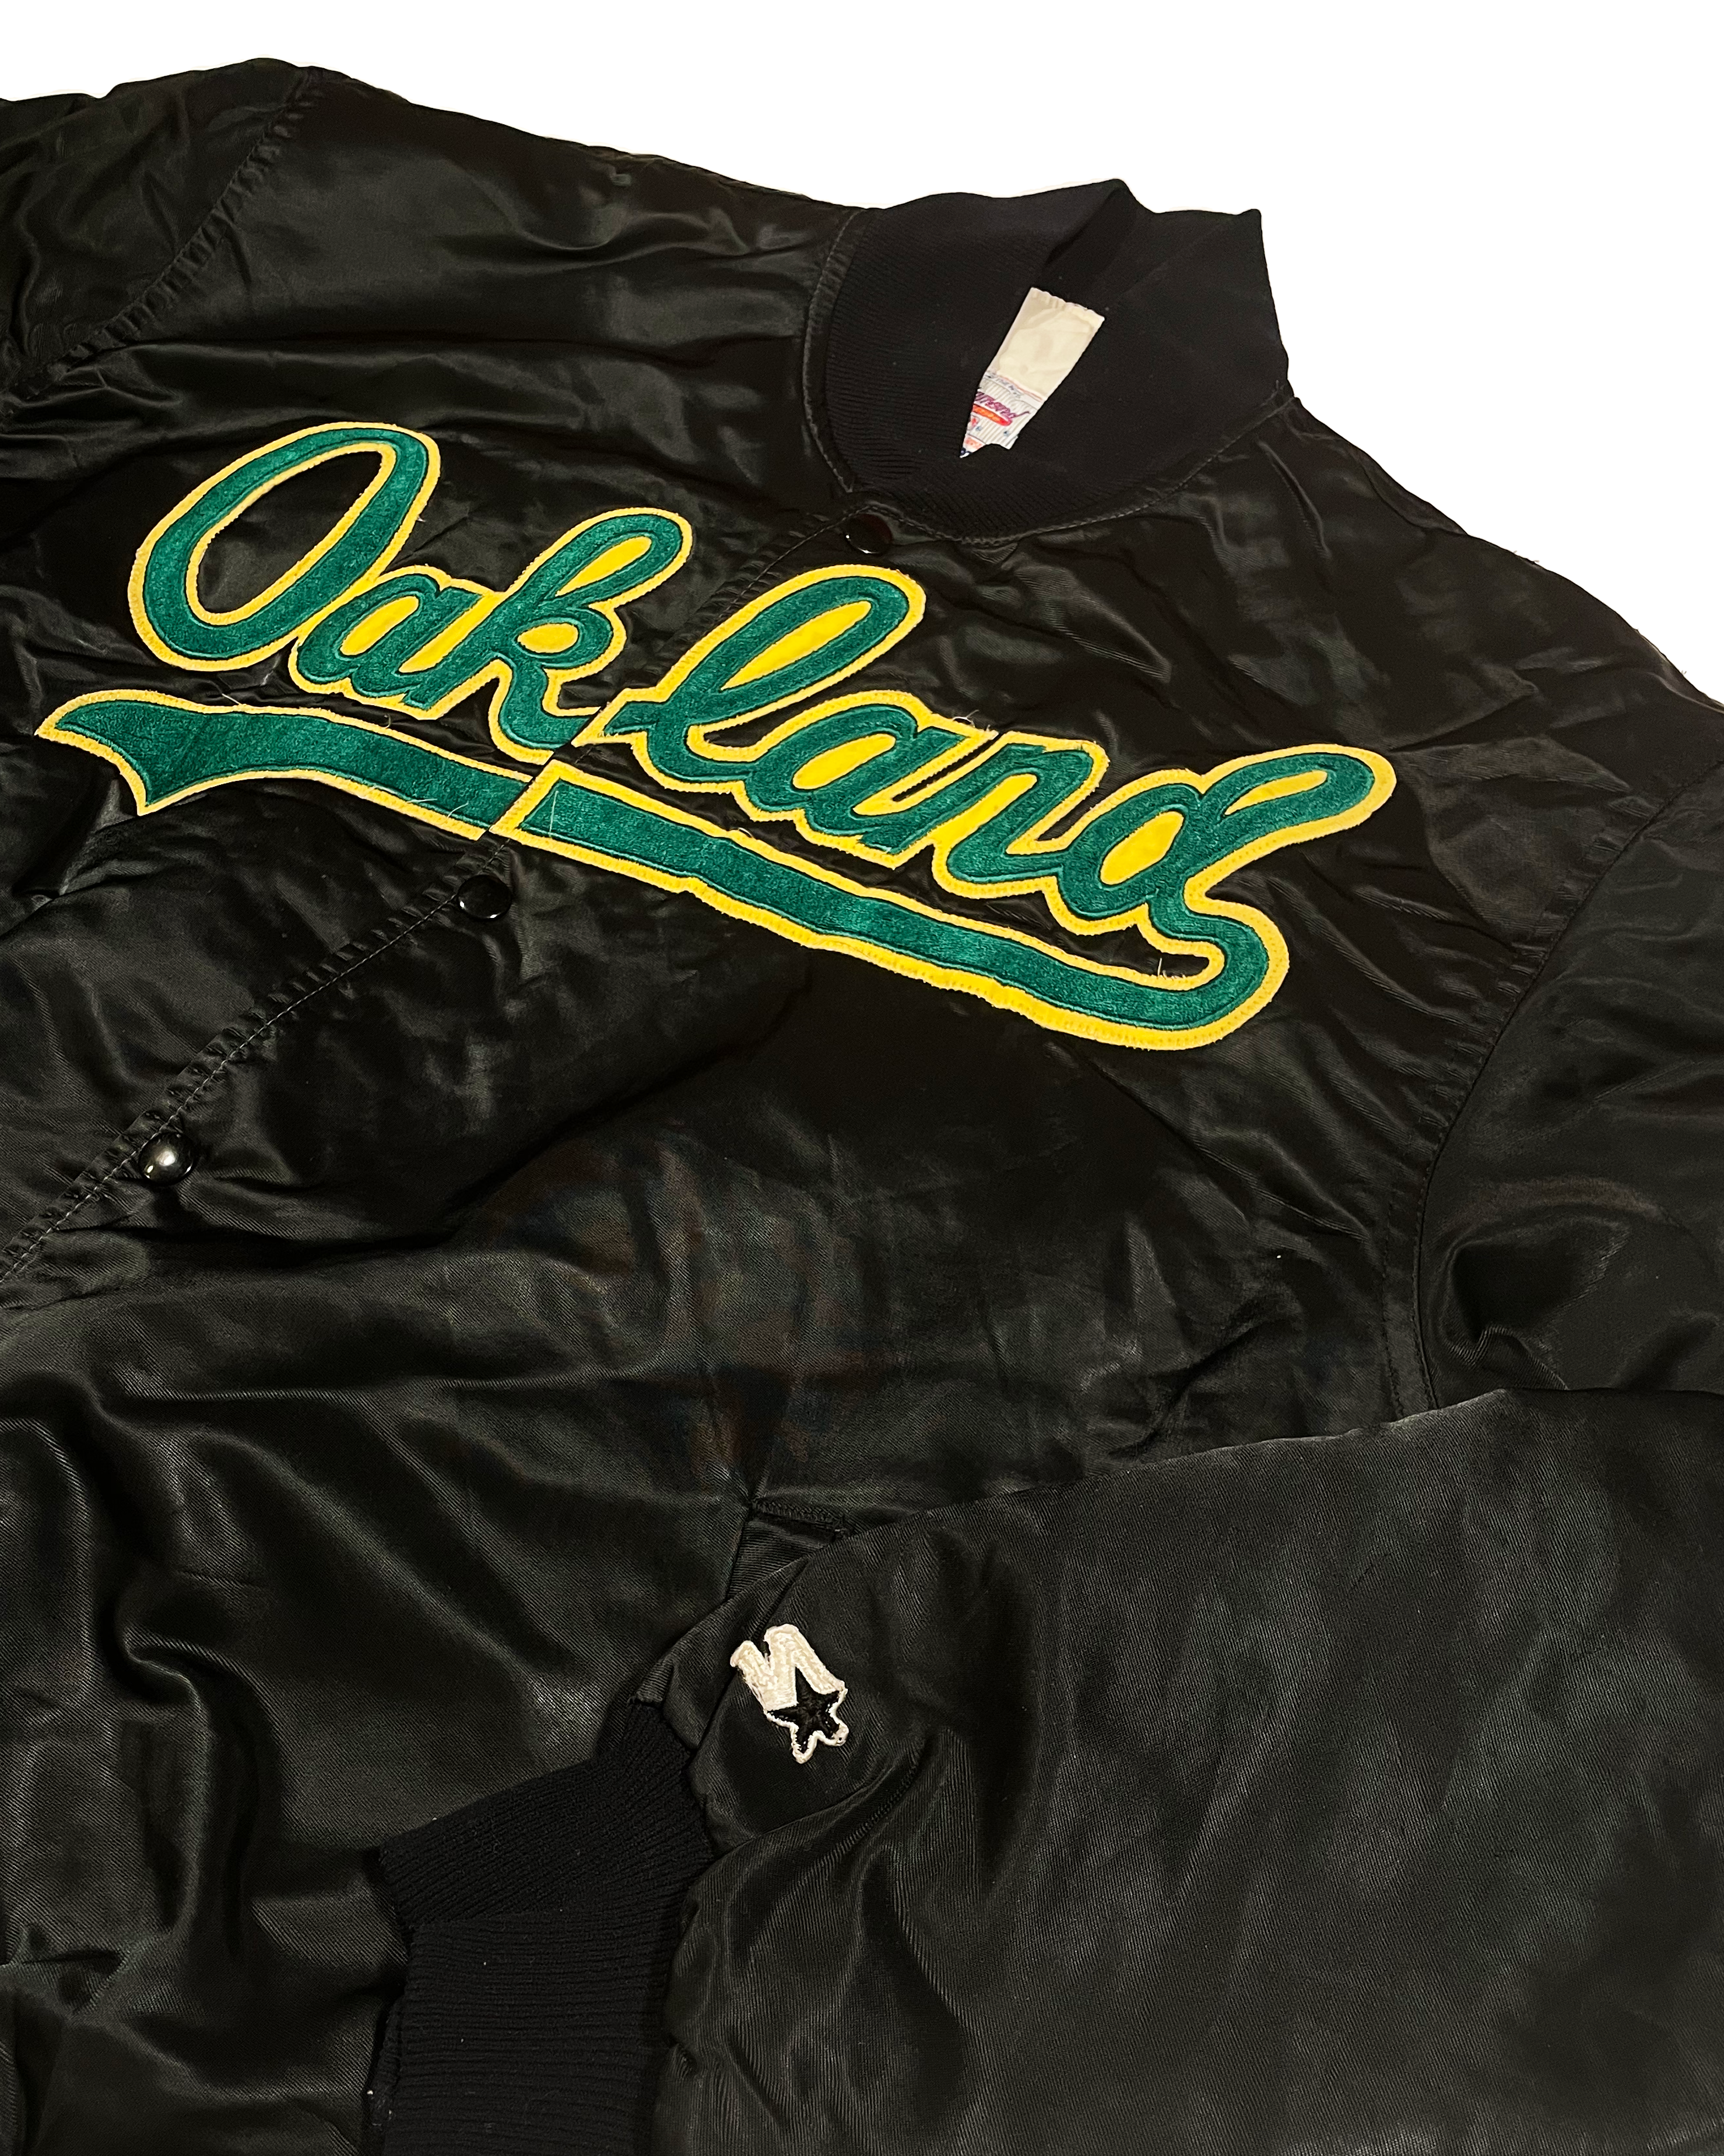 vintage oakland athletics jacket